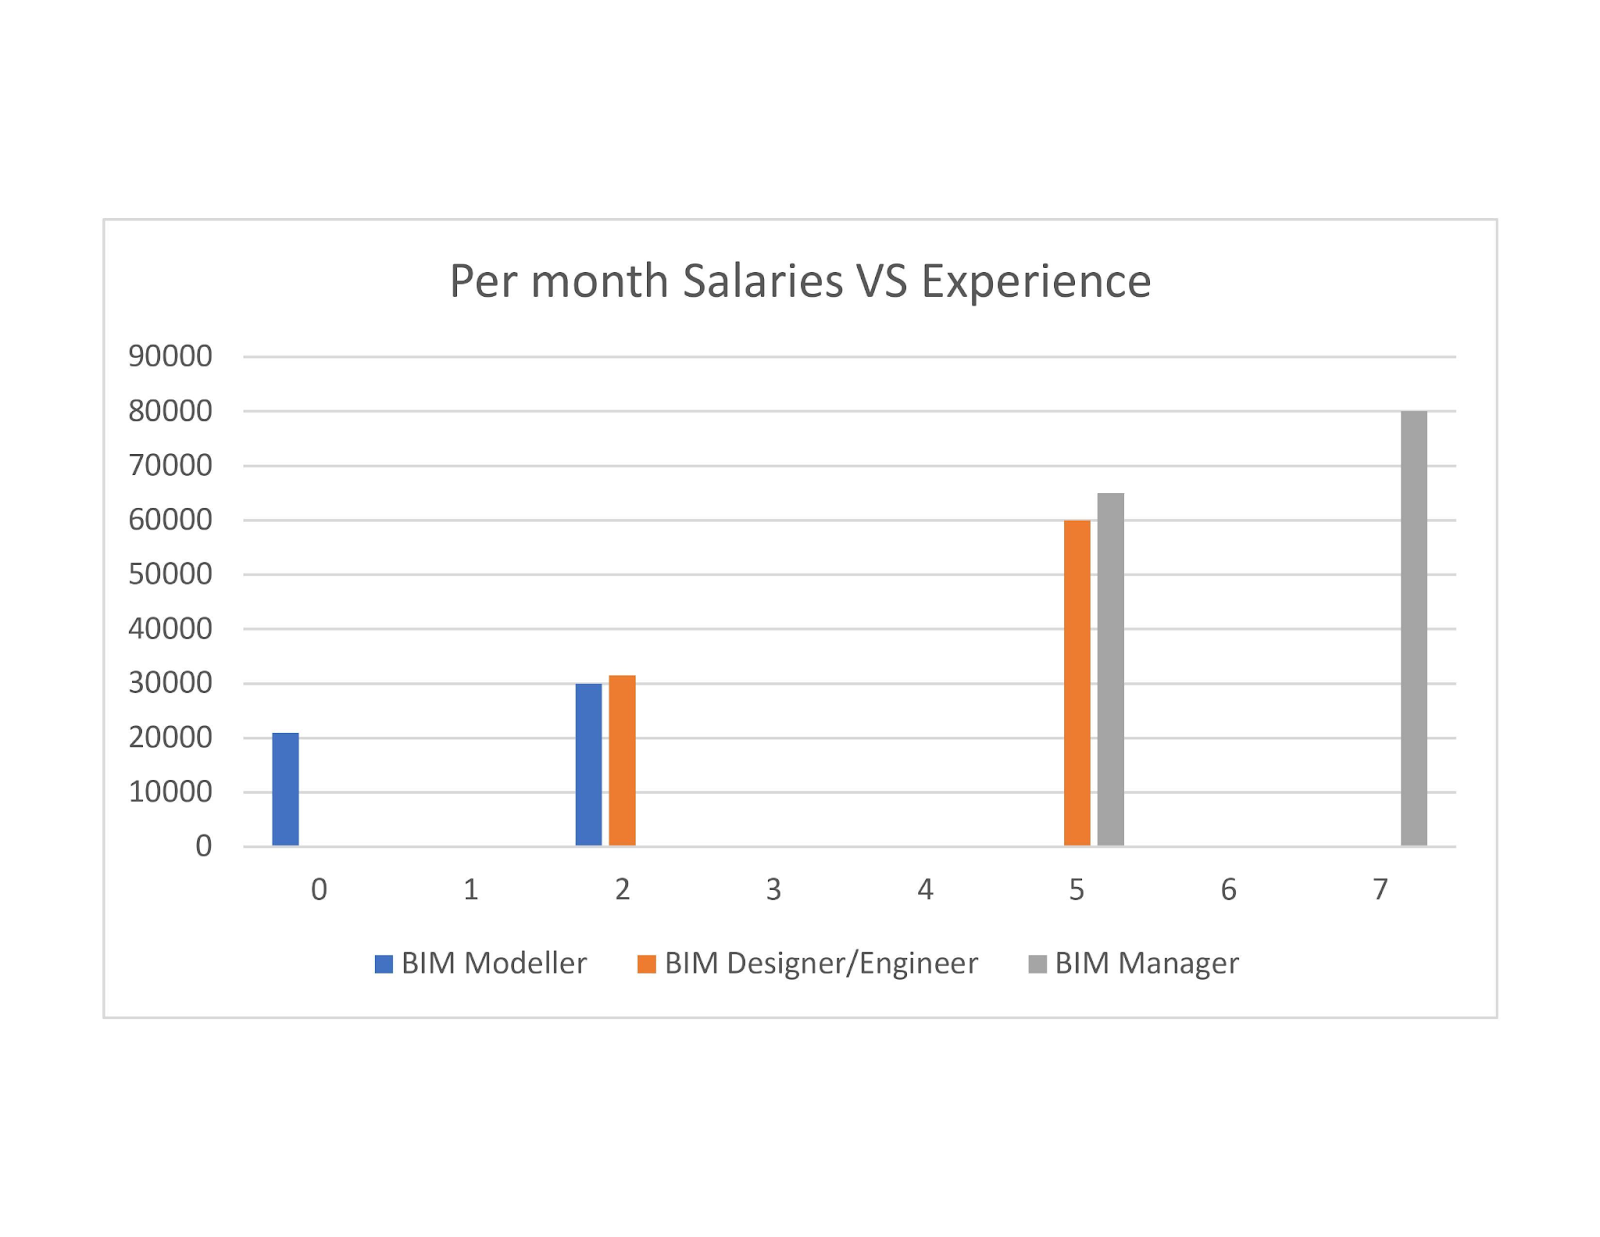 Salary graph of BIM professionals